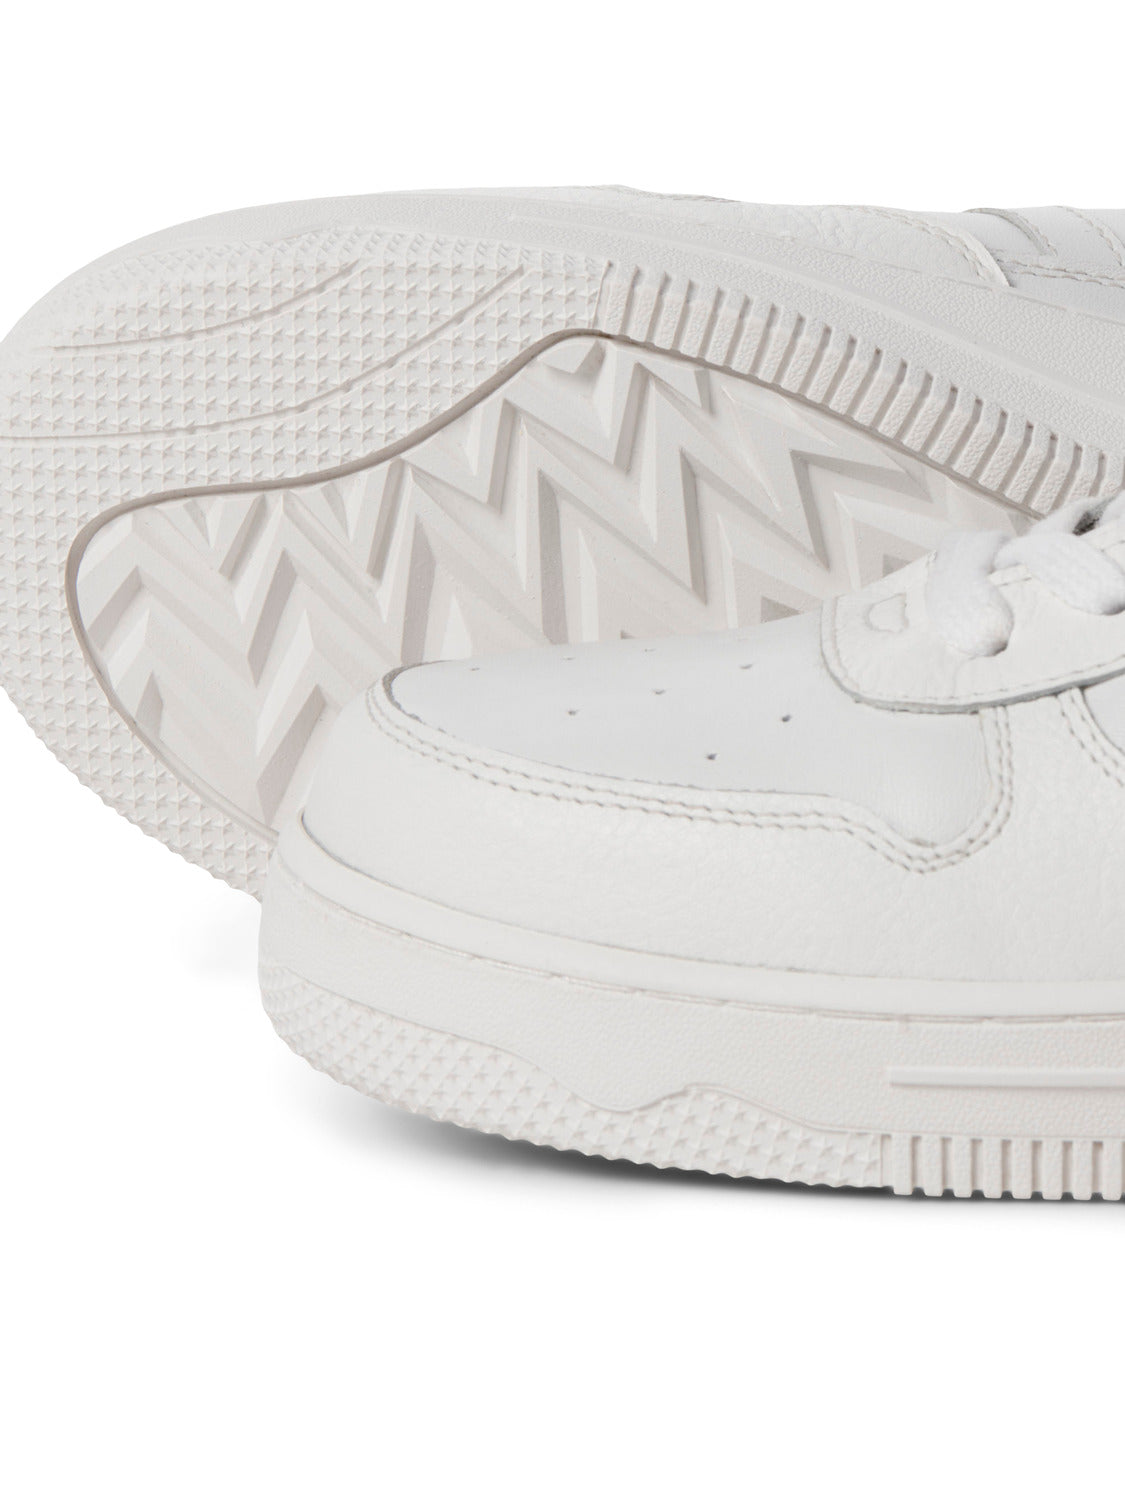 JFWBRAD Sneakers - White